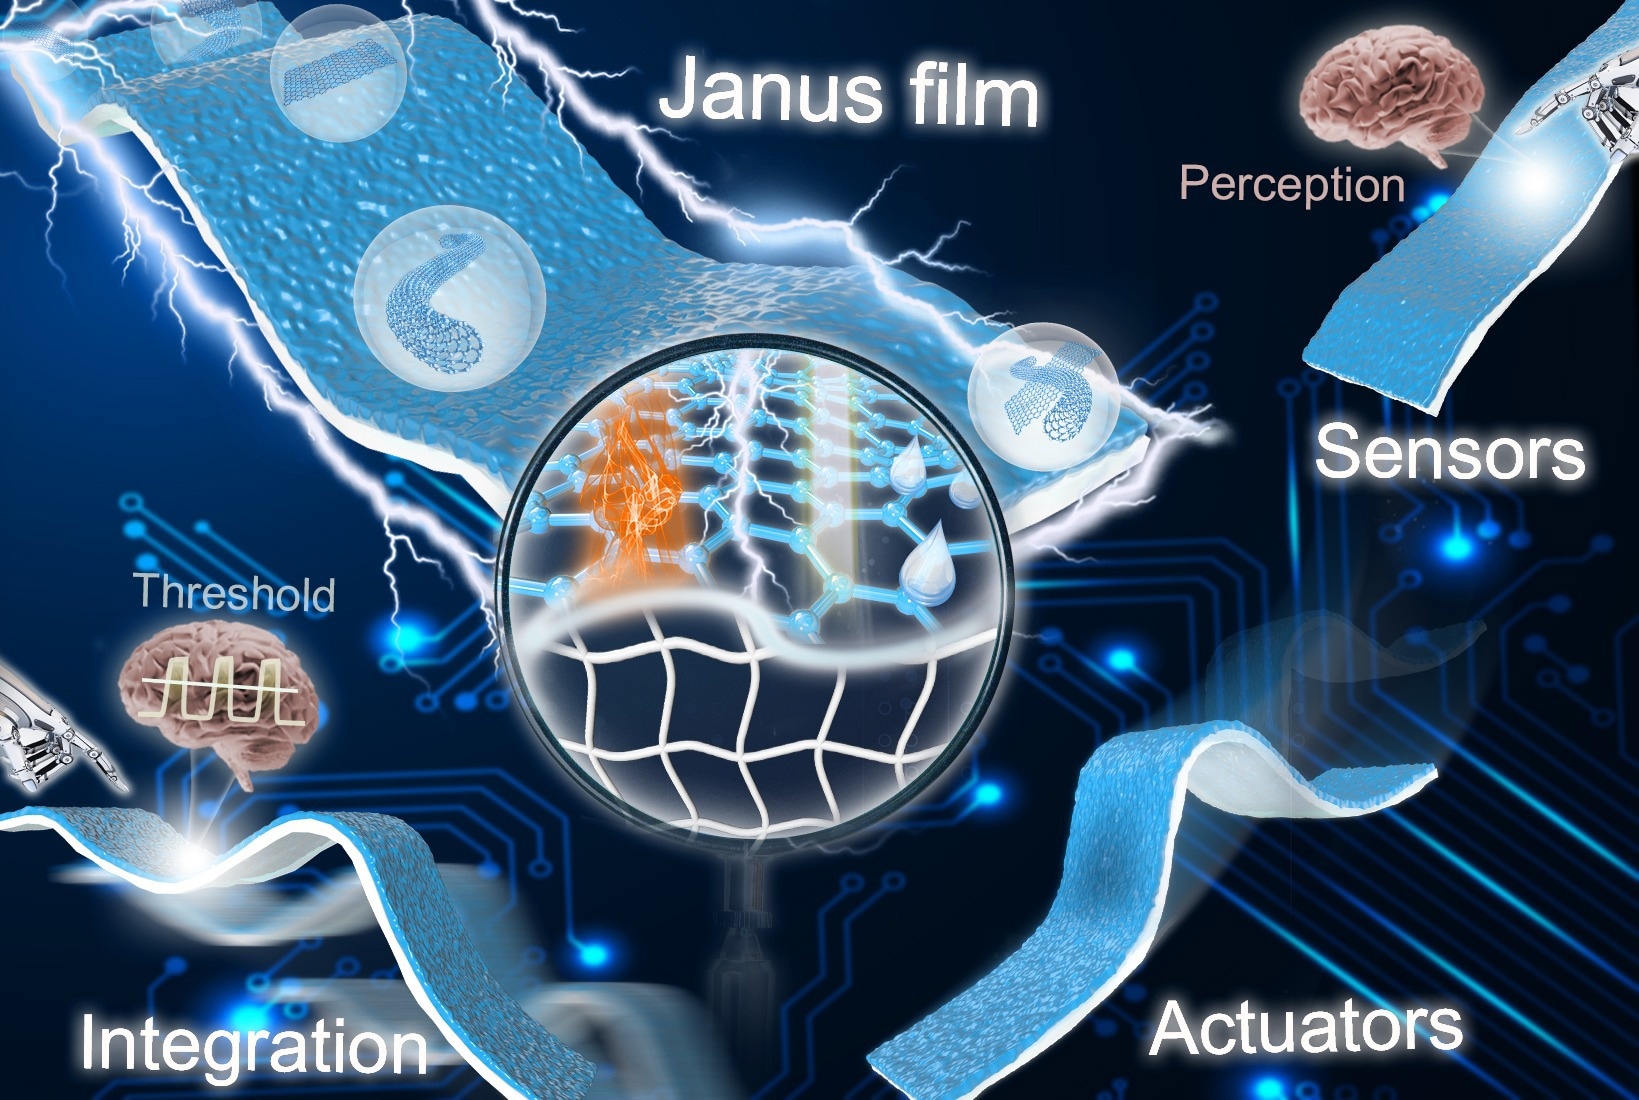 Janus films exhibit huge potential in actuation, sensing, advanced separation, energy conversion, storage, etc.